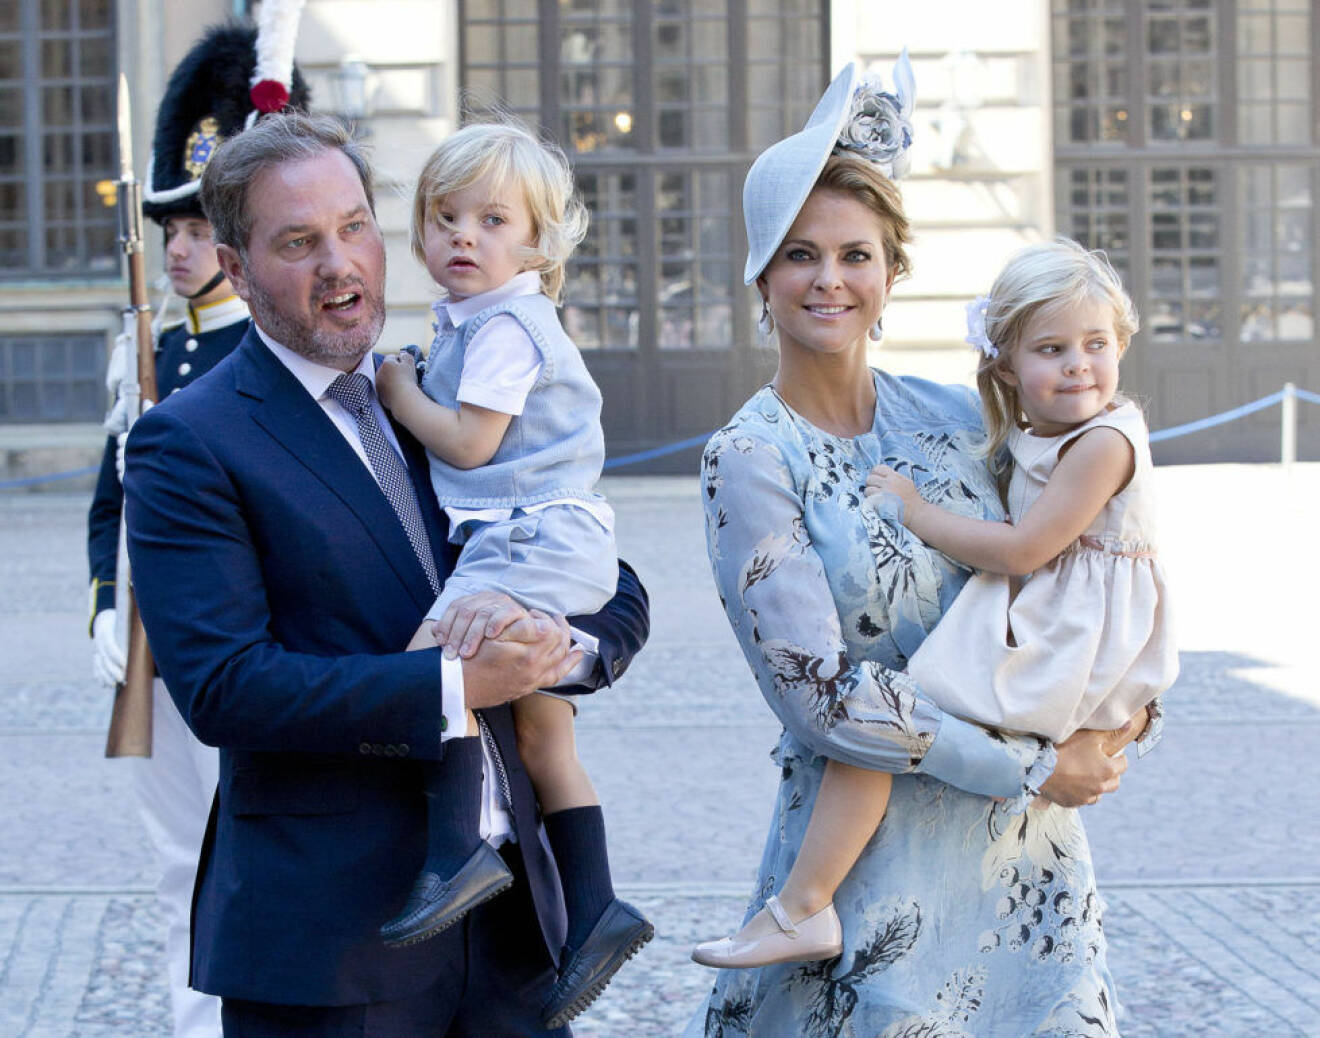 Chris O'Neill, prins Nicolas, prinsessan Madeleine och prinsessan Leonore firade kronprinsessan Victorias 40-årsdag i juli.